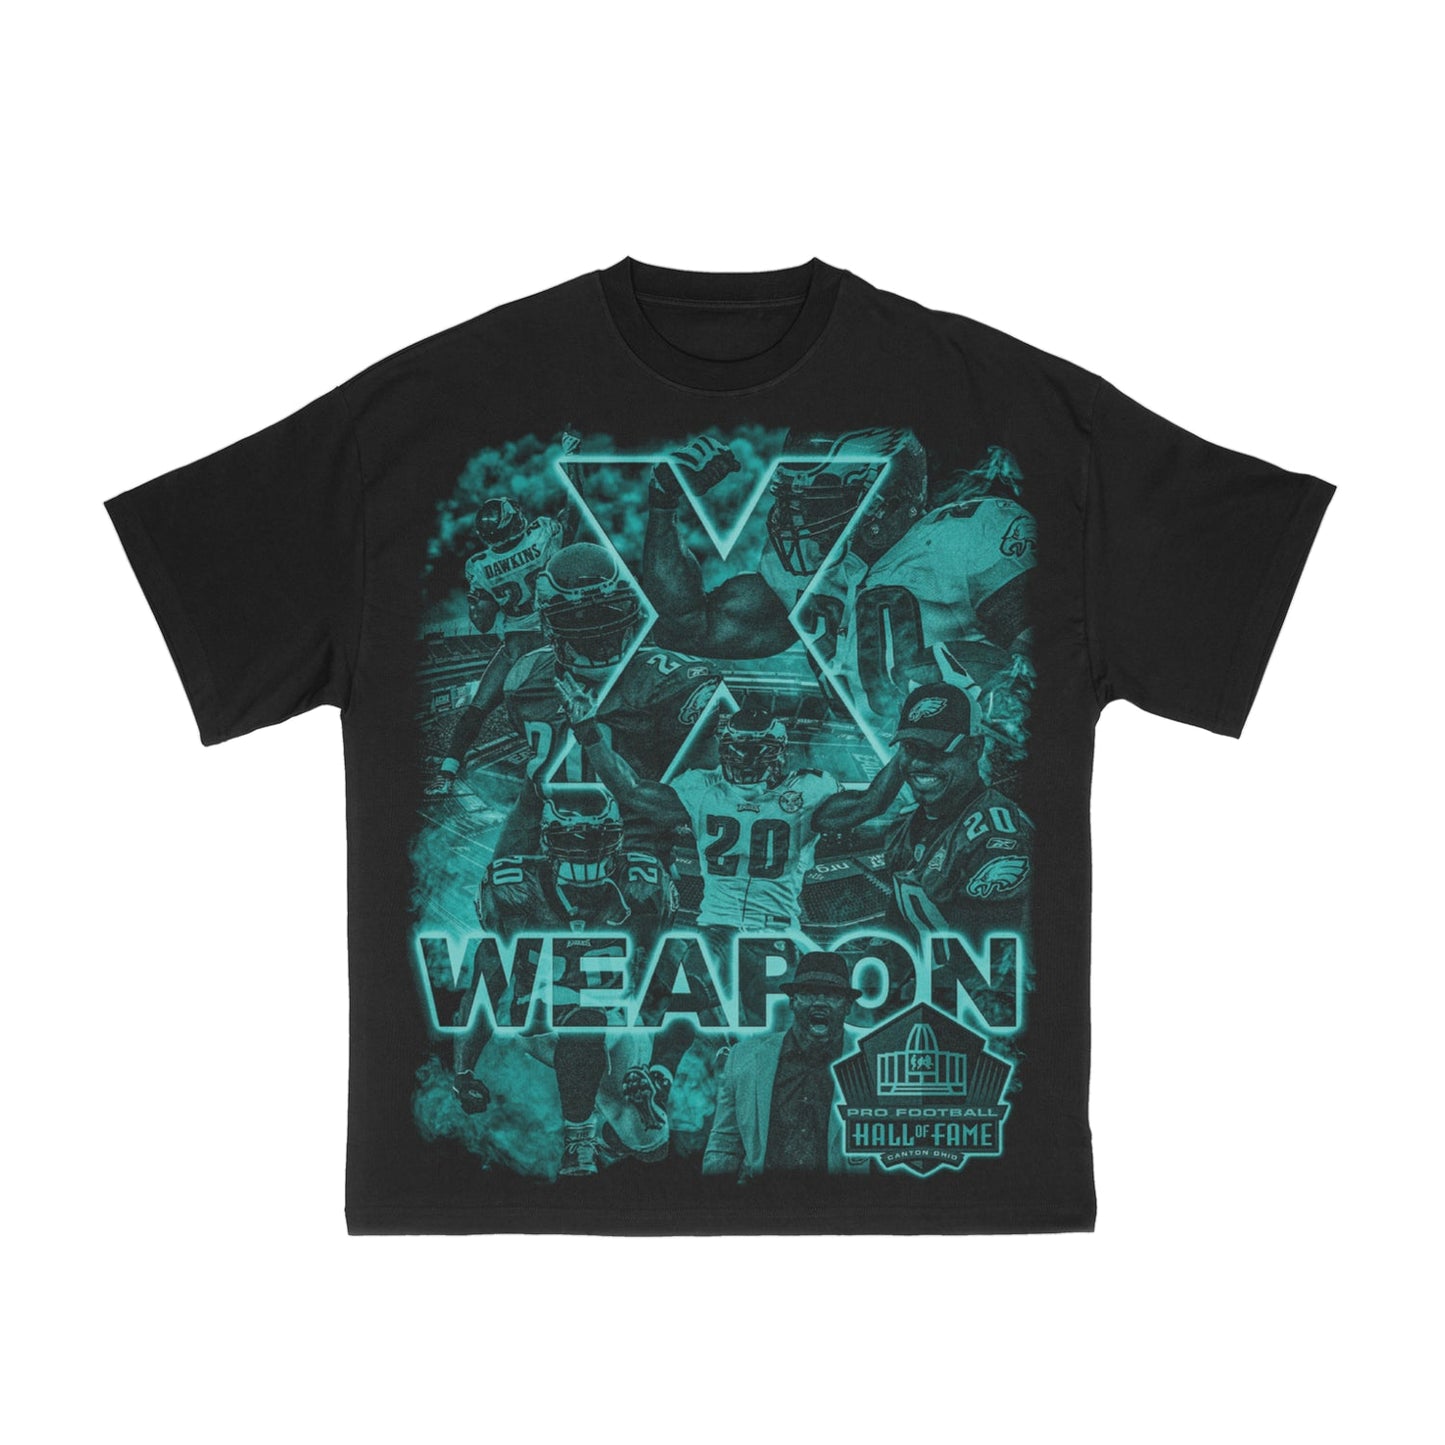 Weapon X Tee (Youth)